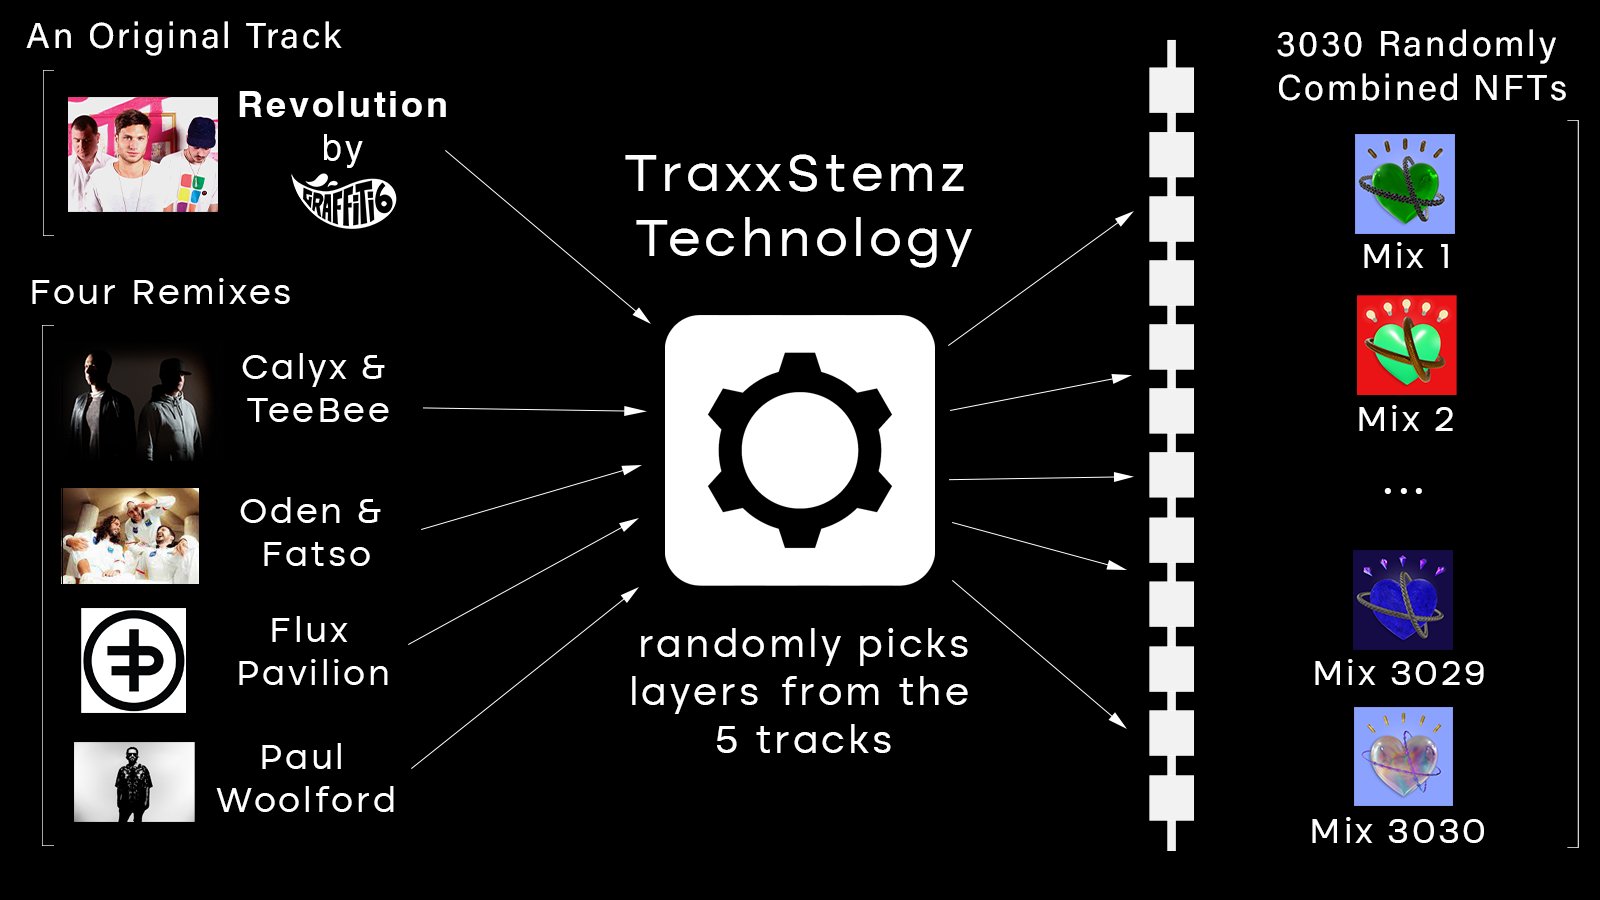 TraxxStemz technology